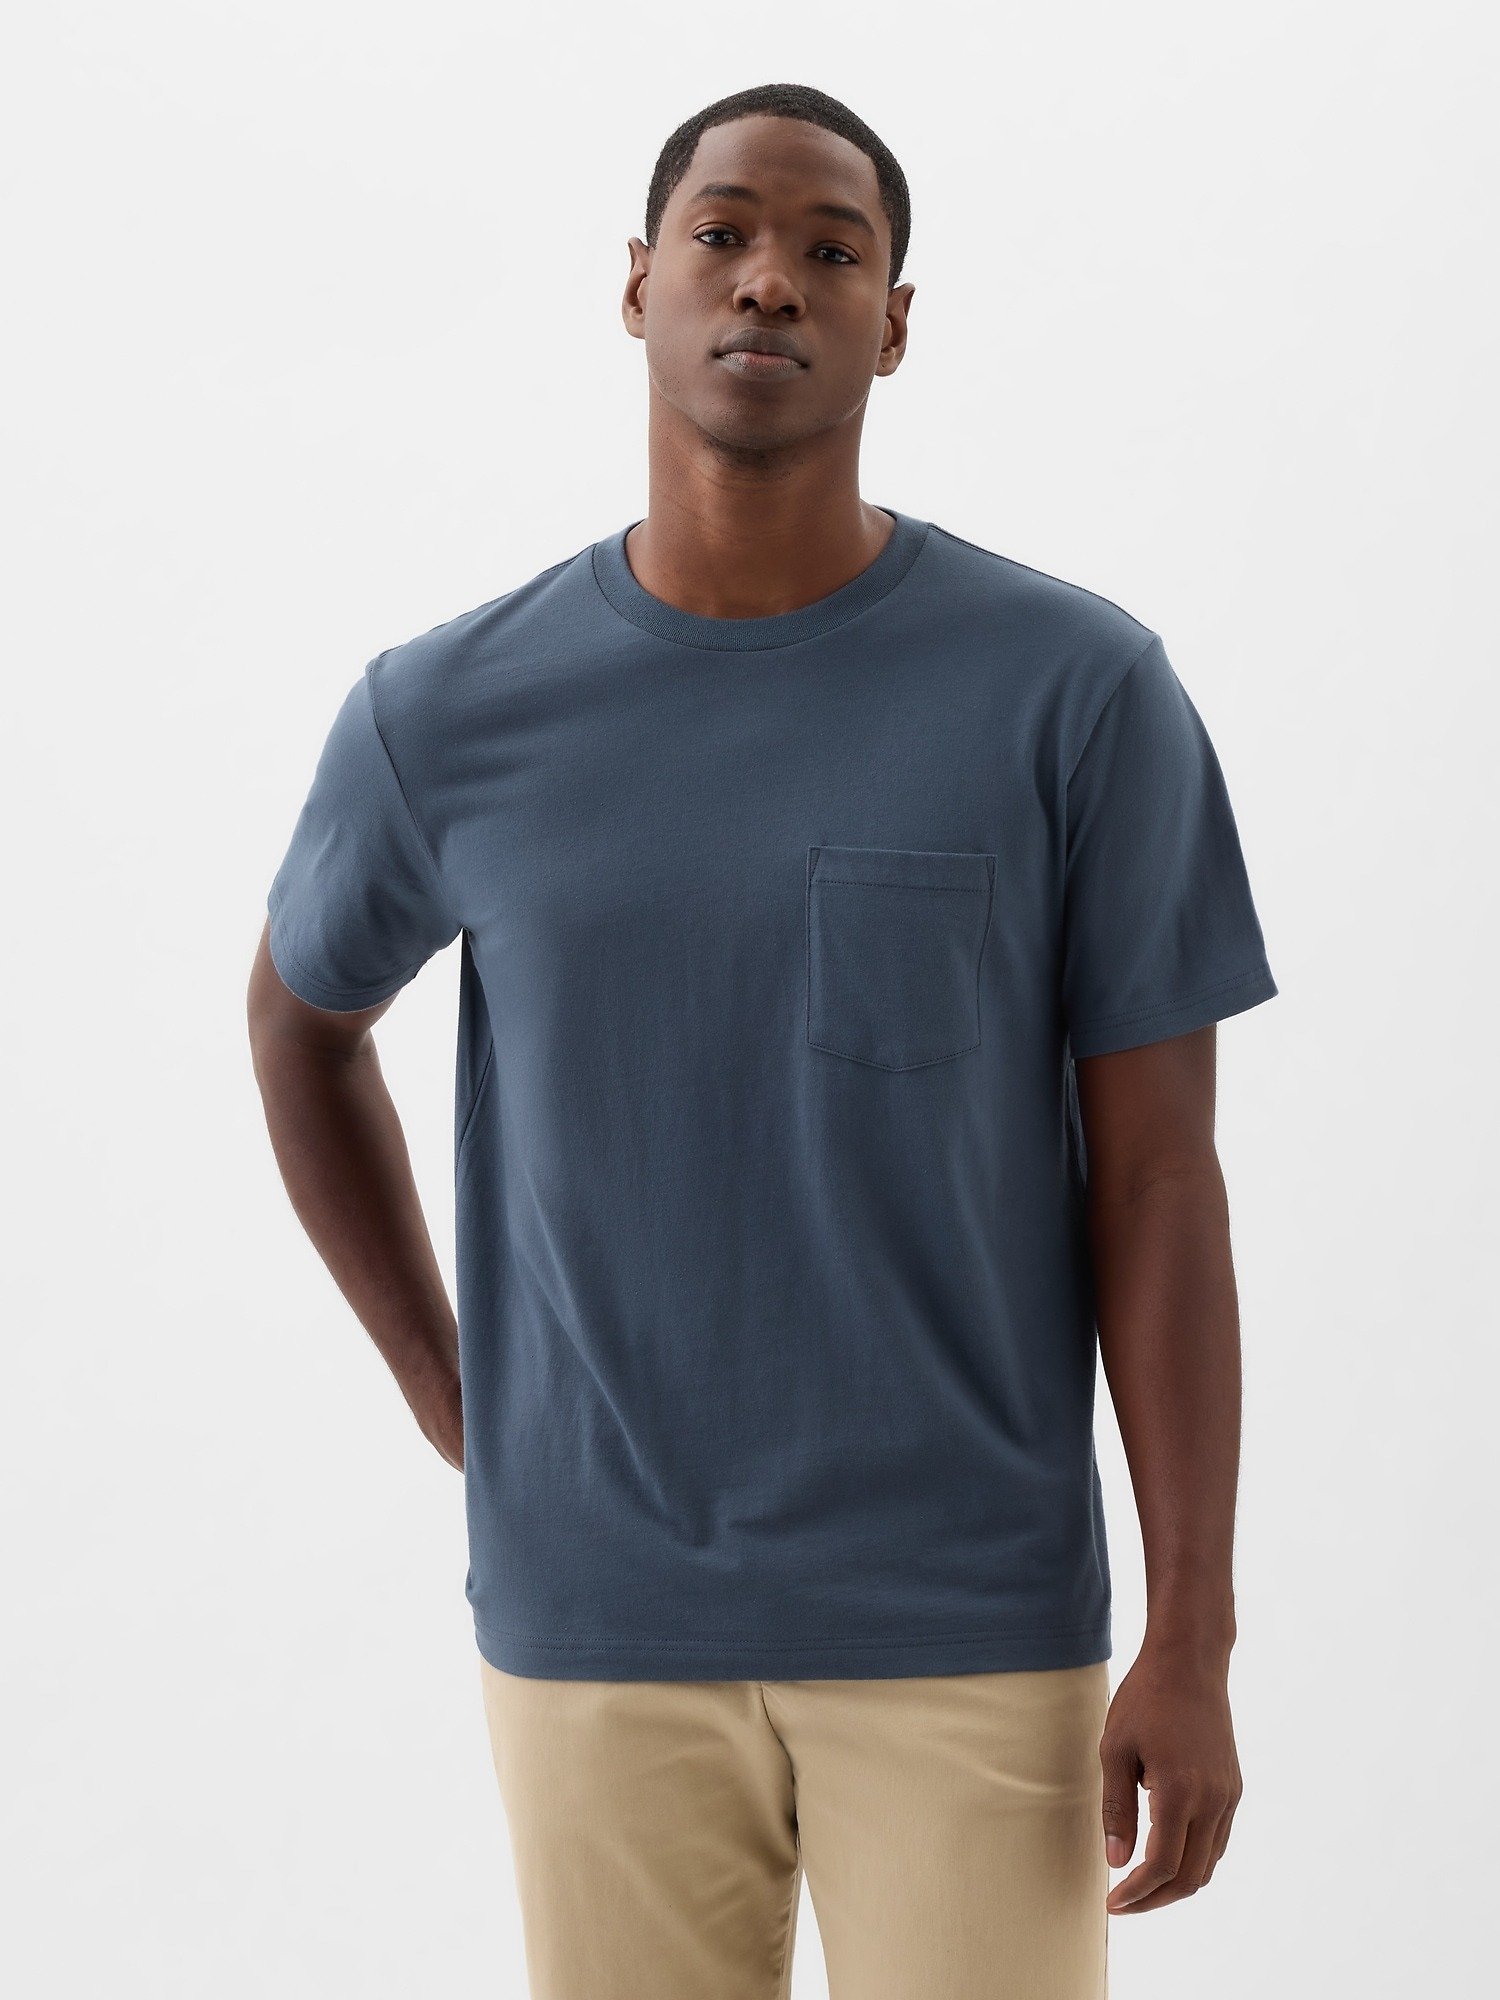 Original Cepli T-Shirt product image